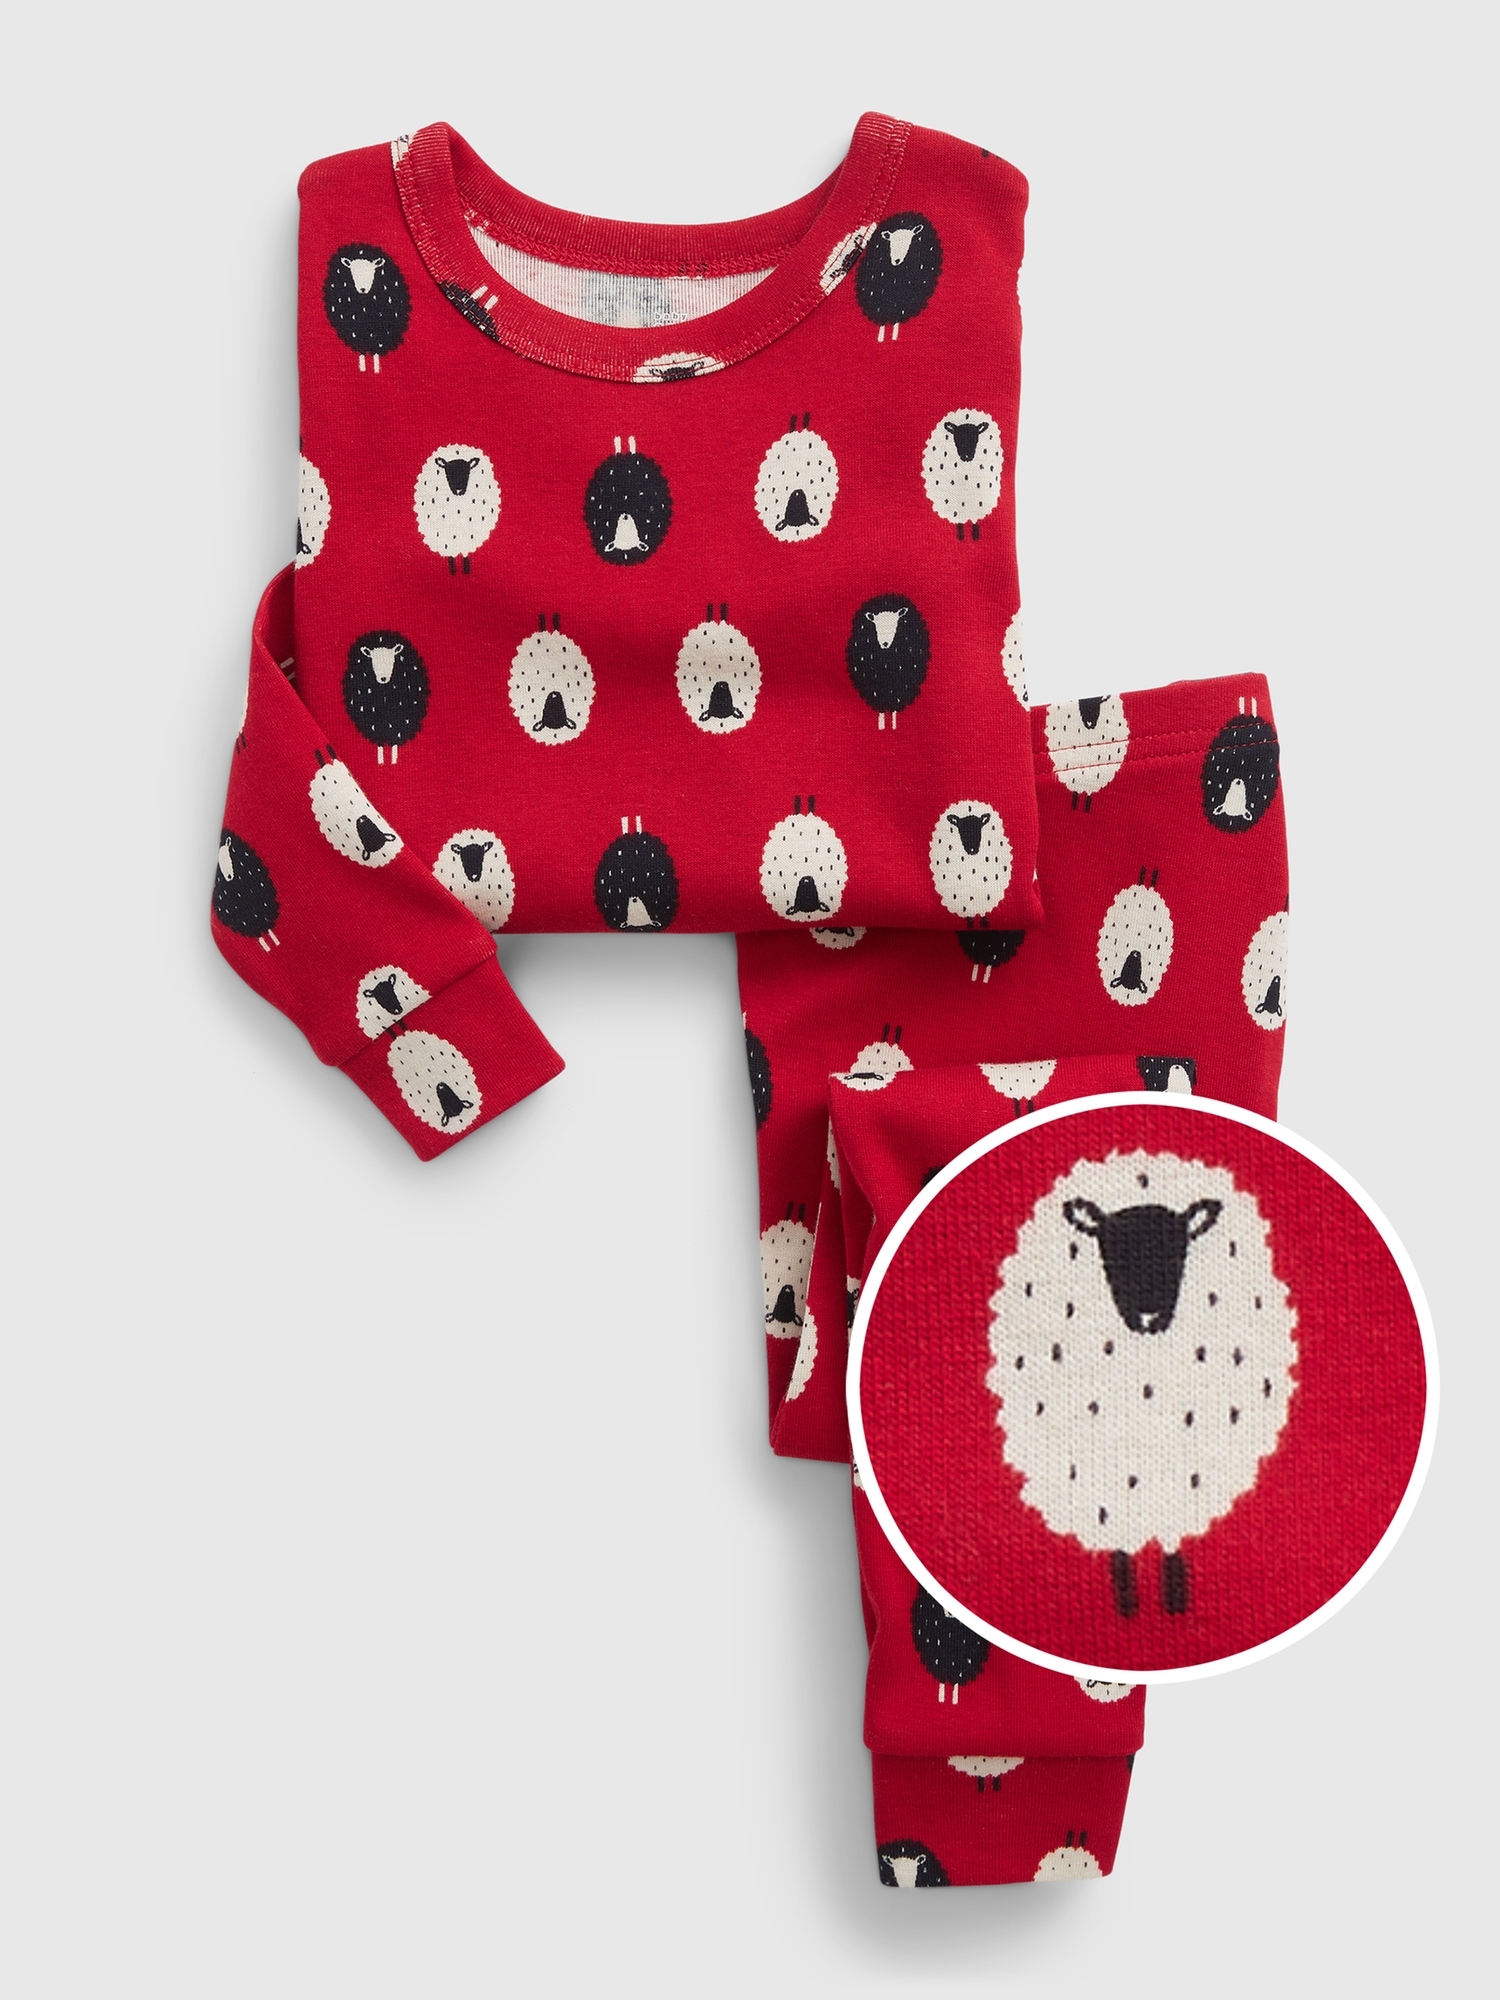 Sense Organics Long John Pyjama with Applique, Red Stripes - 100% organic  cotton unisex (bambini)